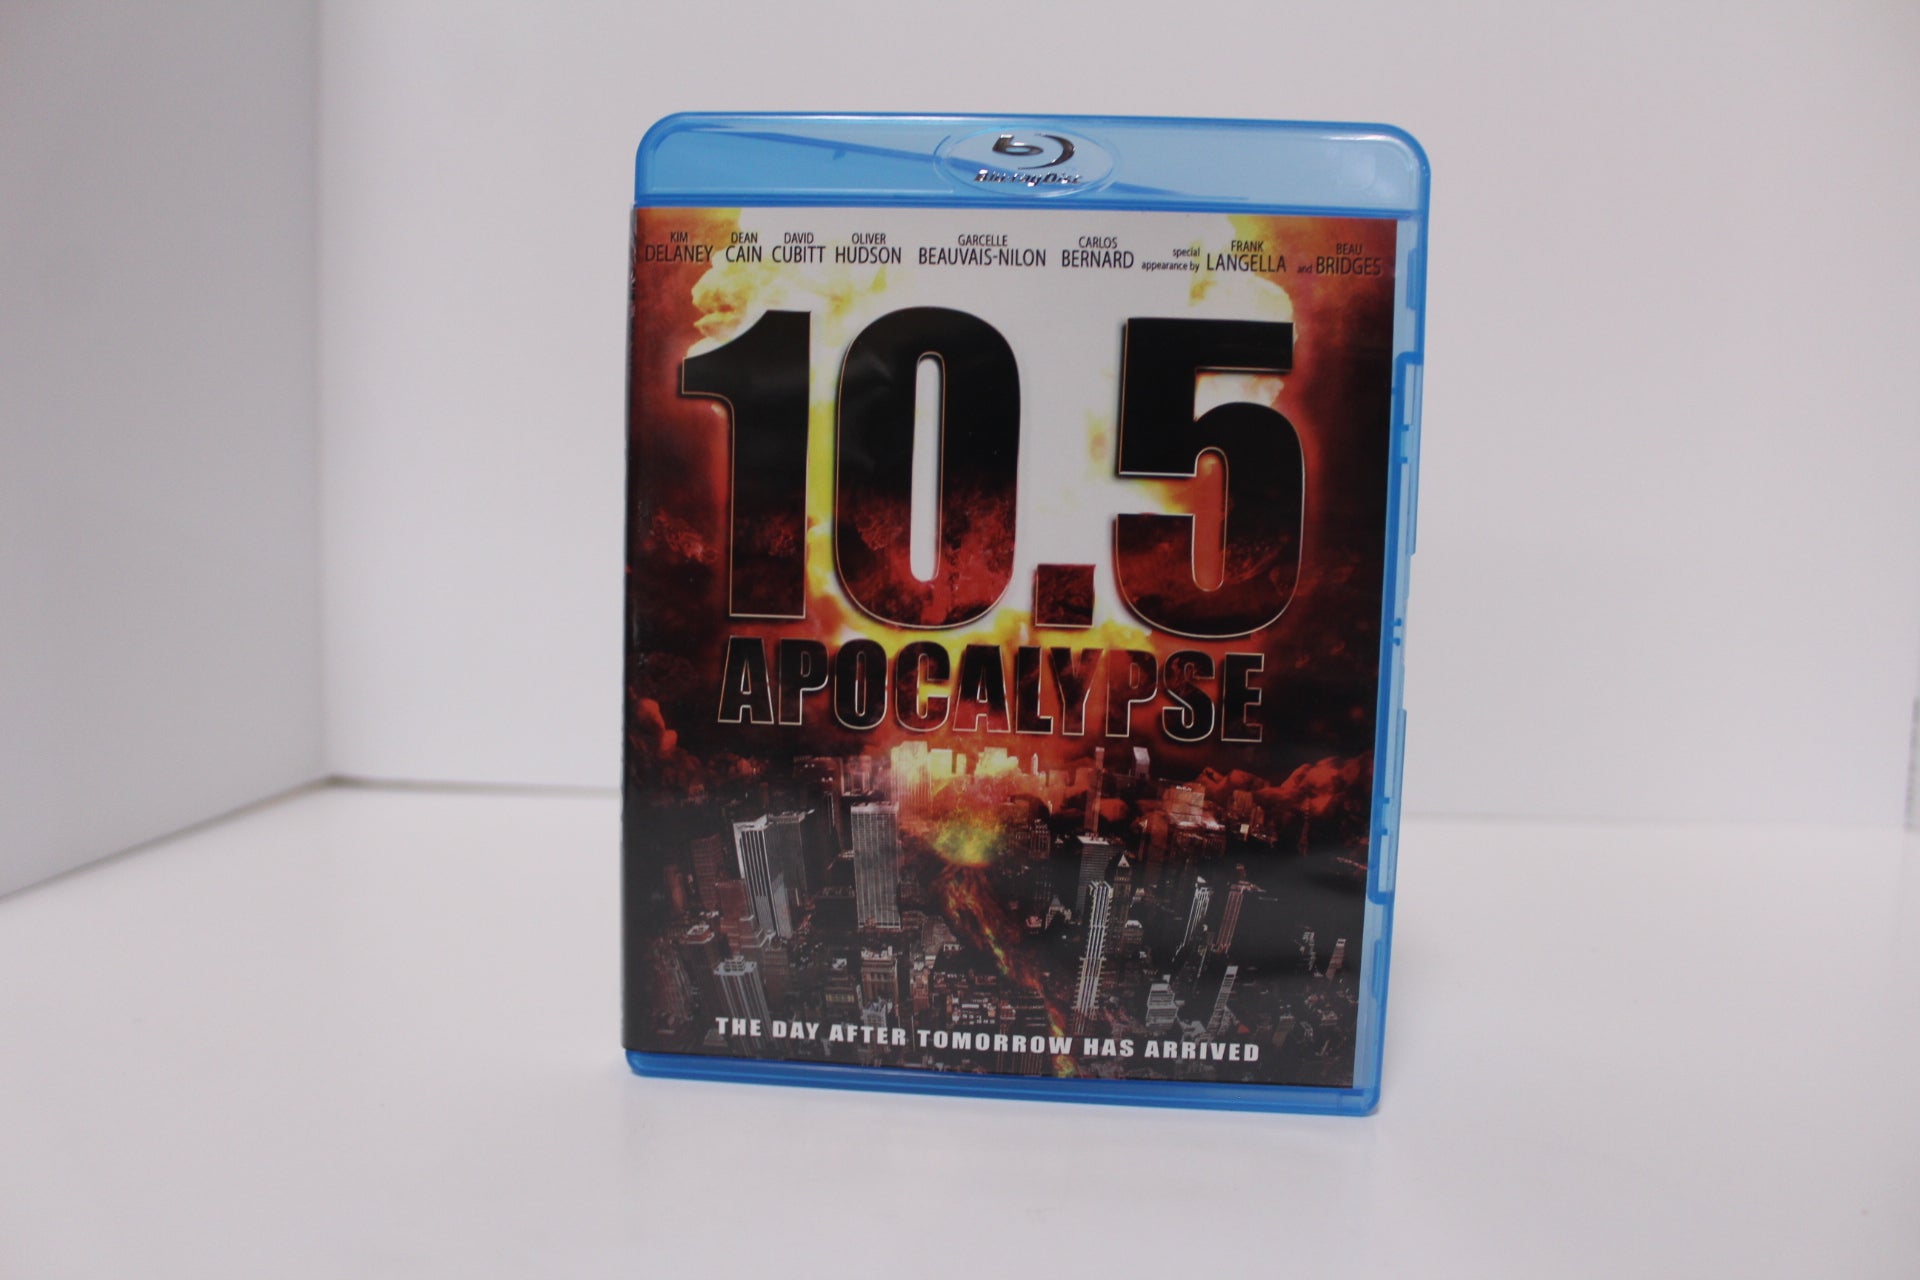 10.5 Apocalypse (Blu-ray Disc, 2008) – Media Mania of Stockbridge